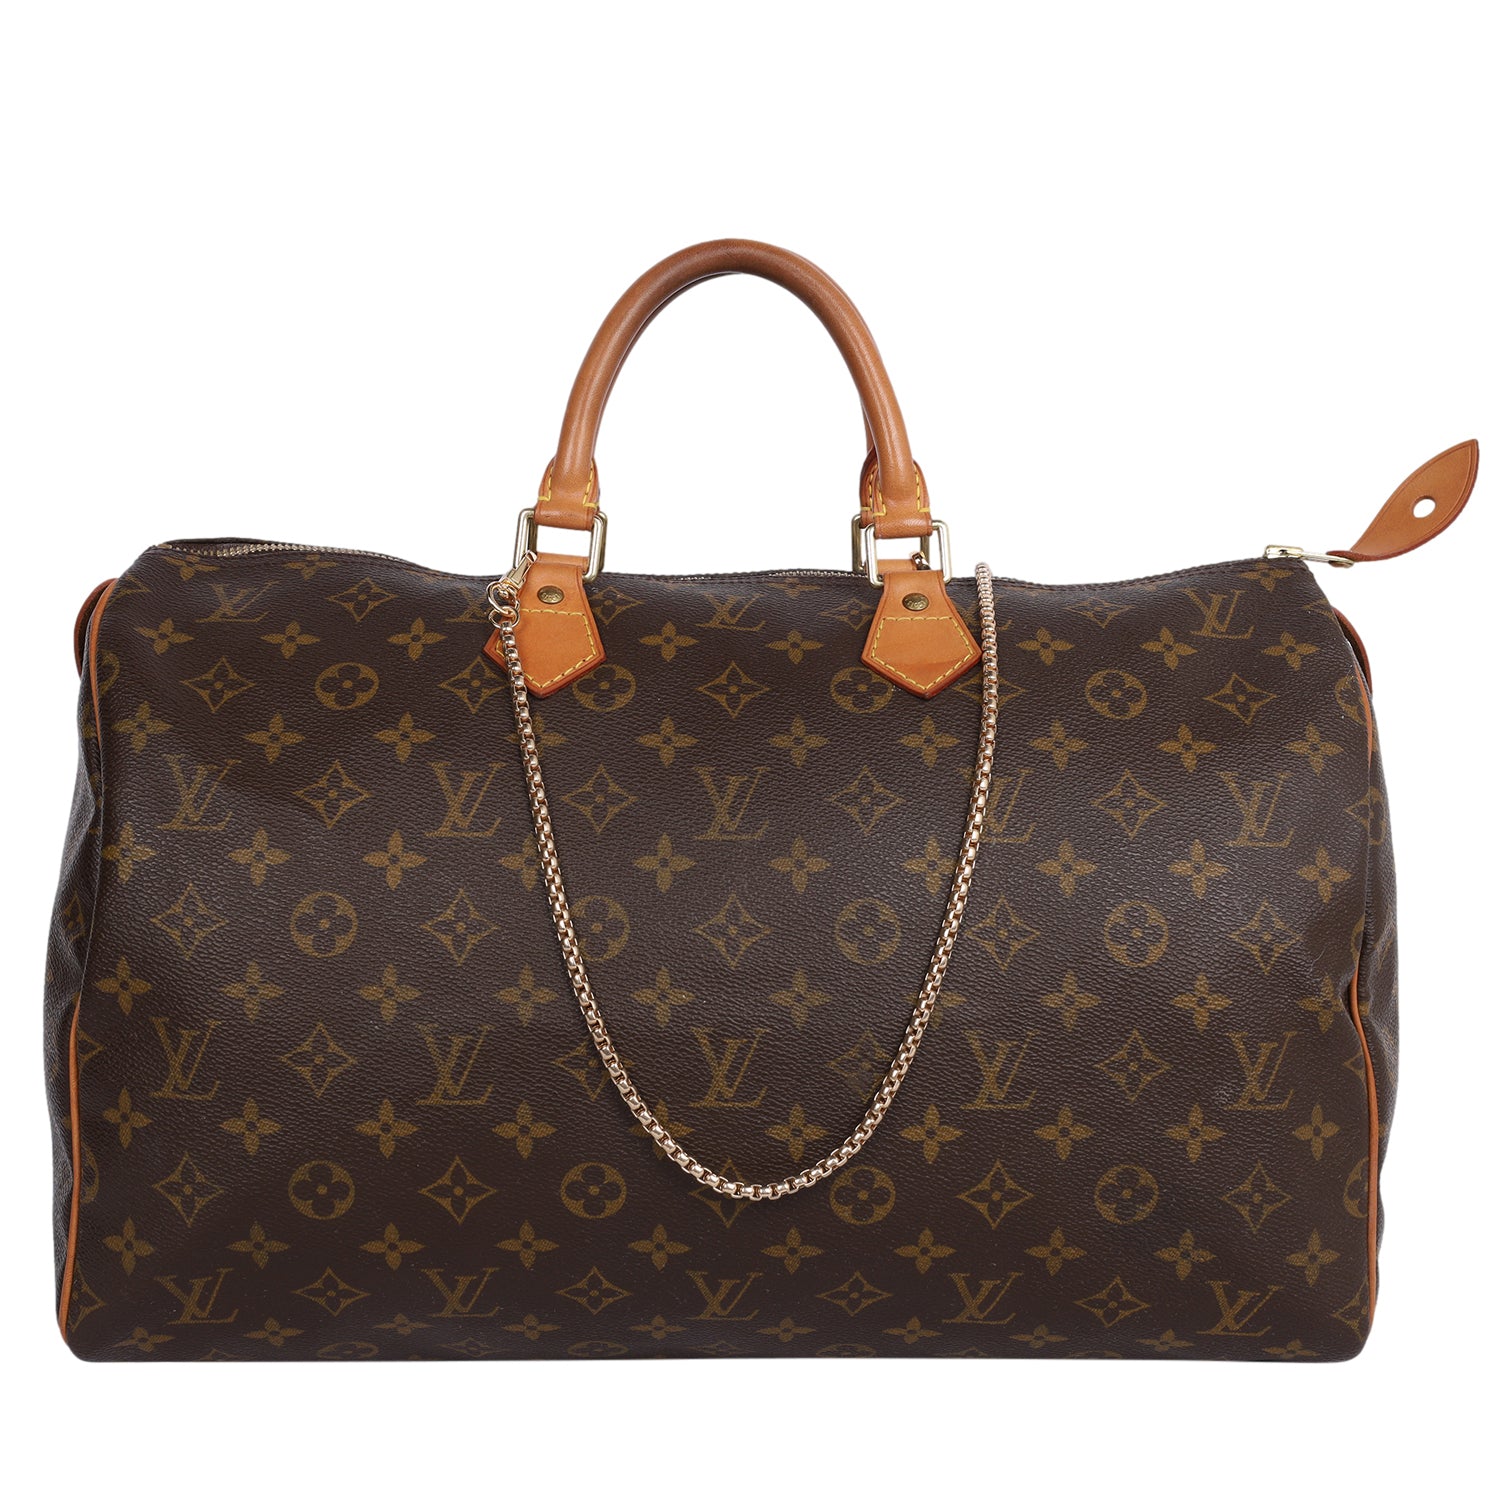 Louis Vuitton handbags authentic used